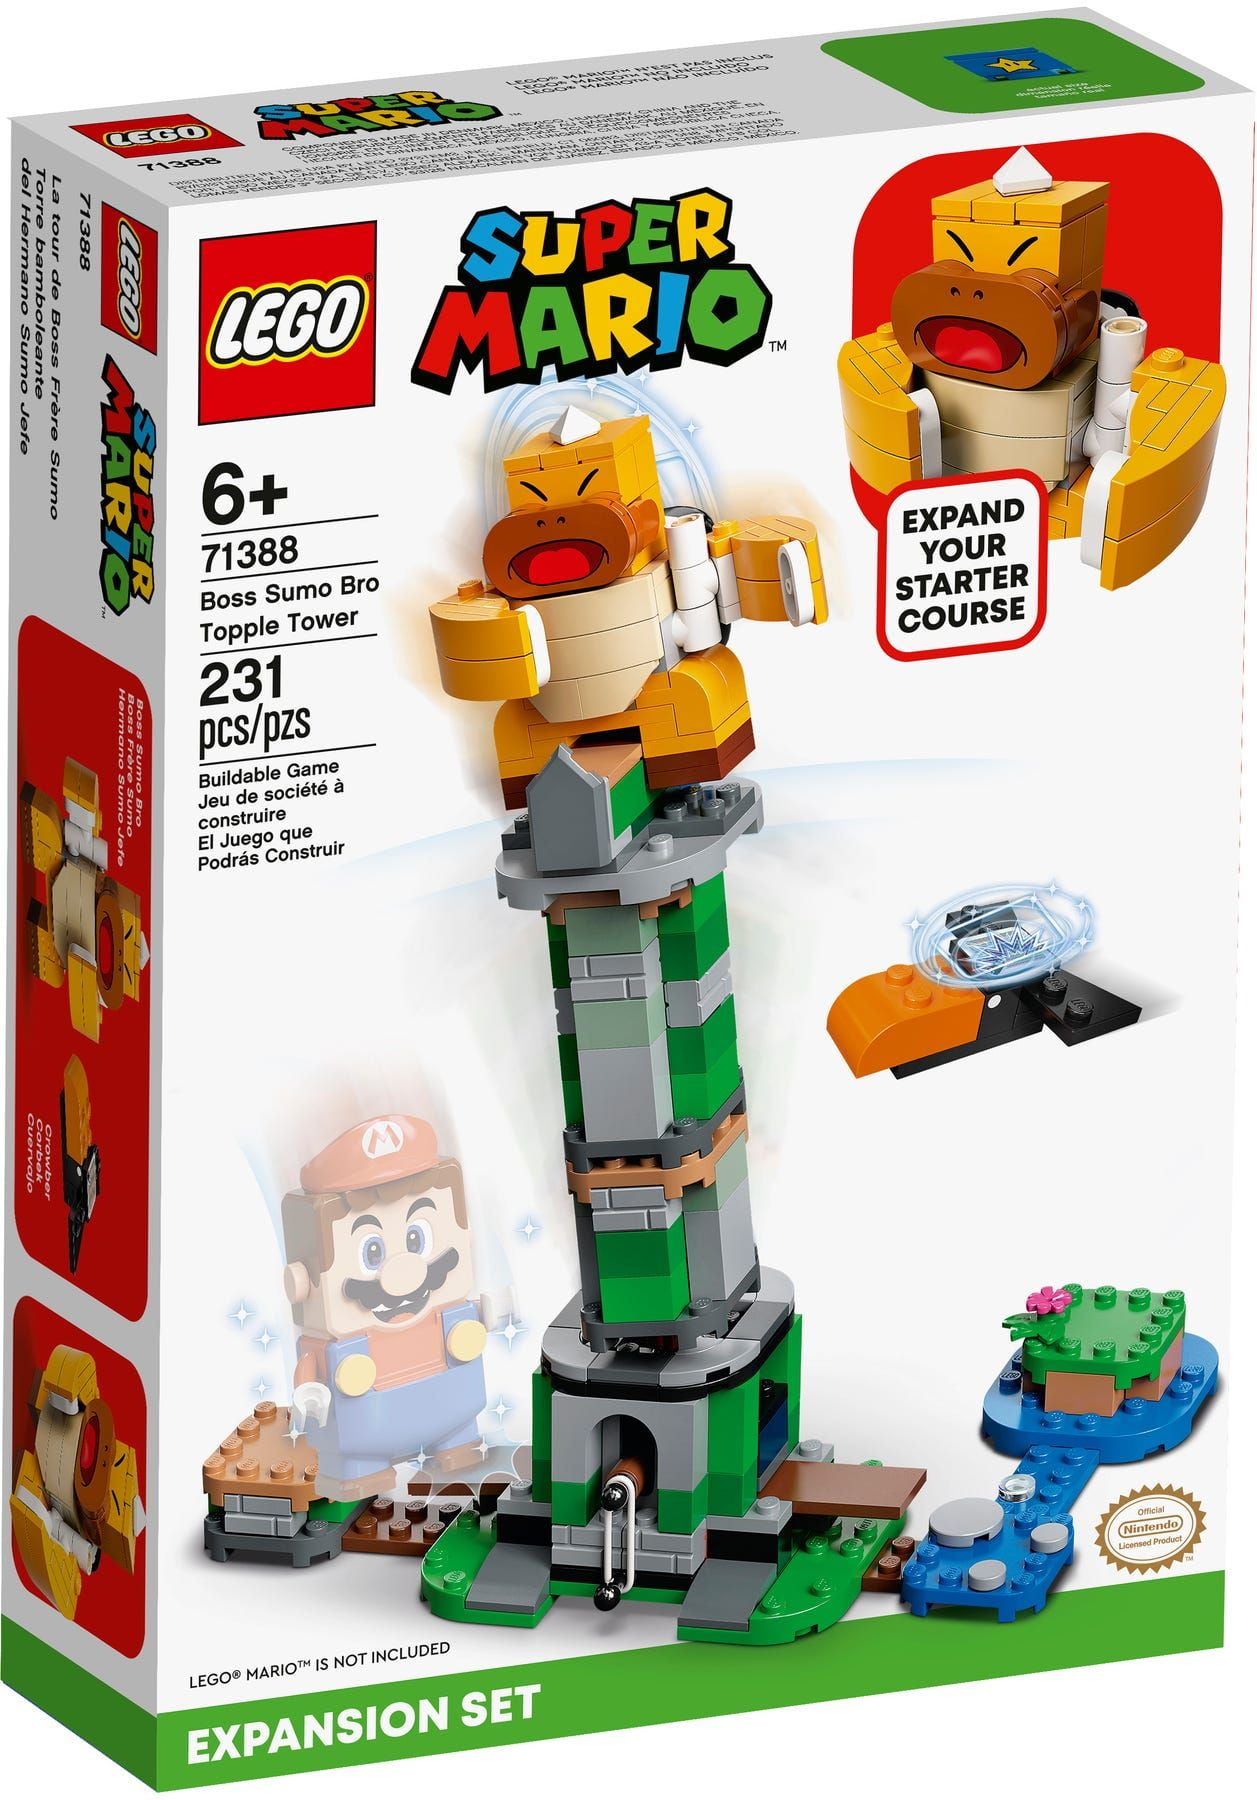 Boss Sumo Bro Topple Tower Expansion Set LEGO Super Mario 71388